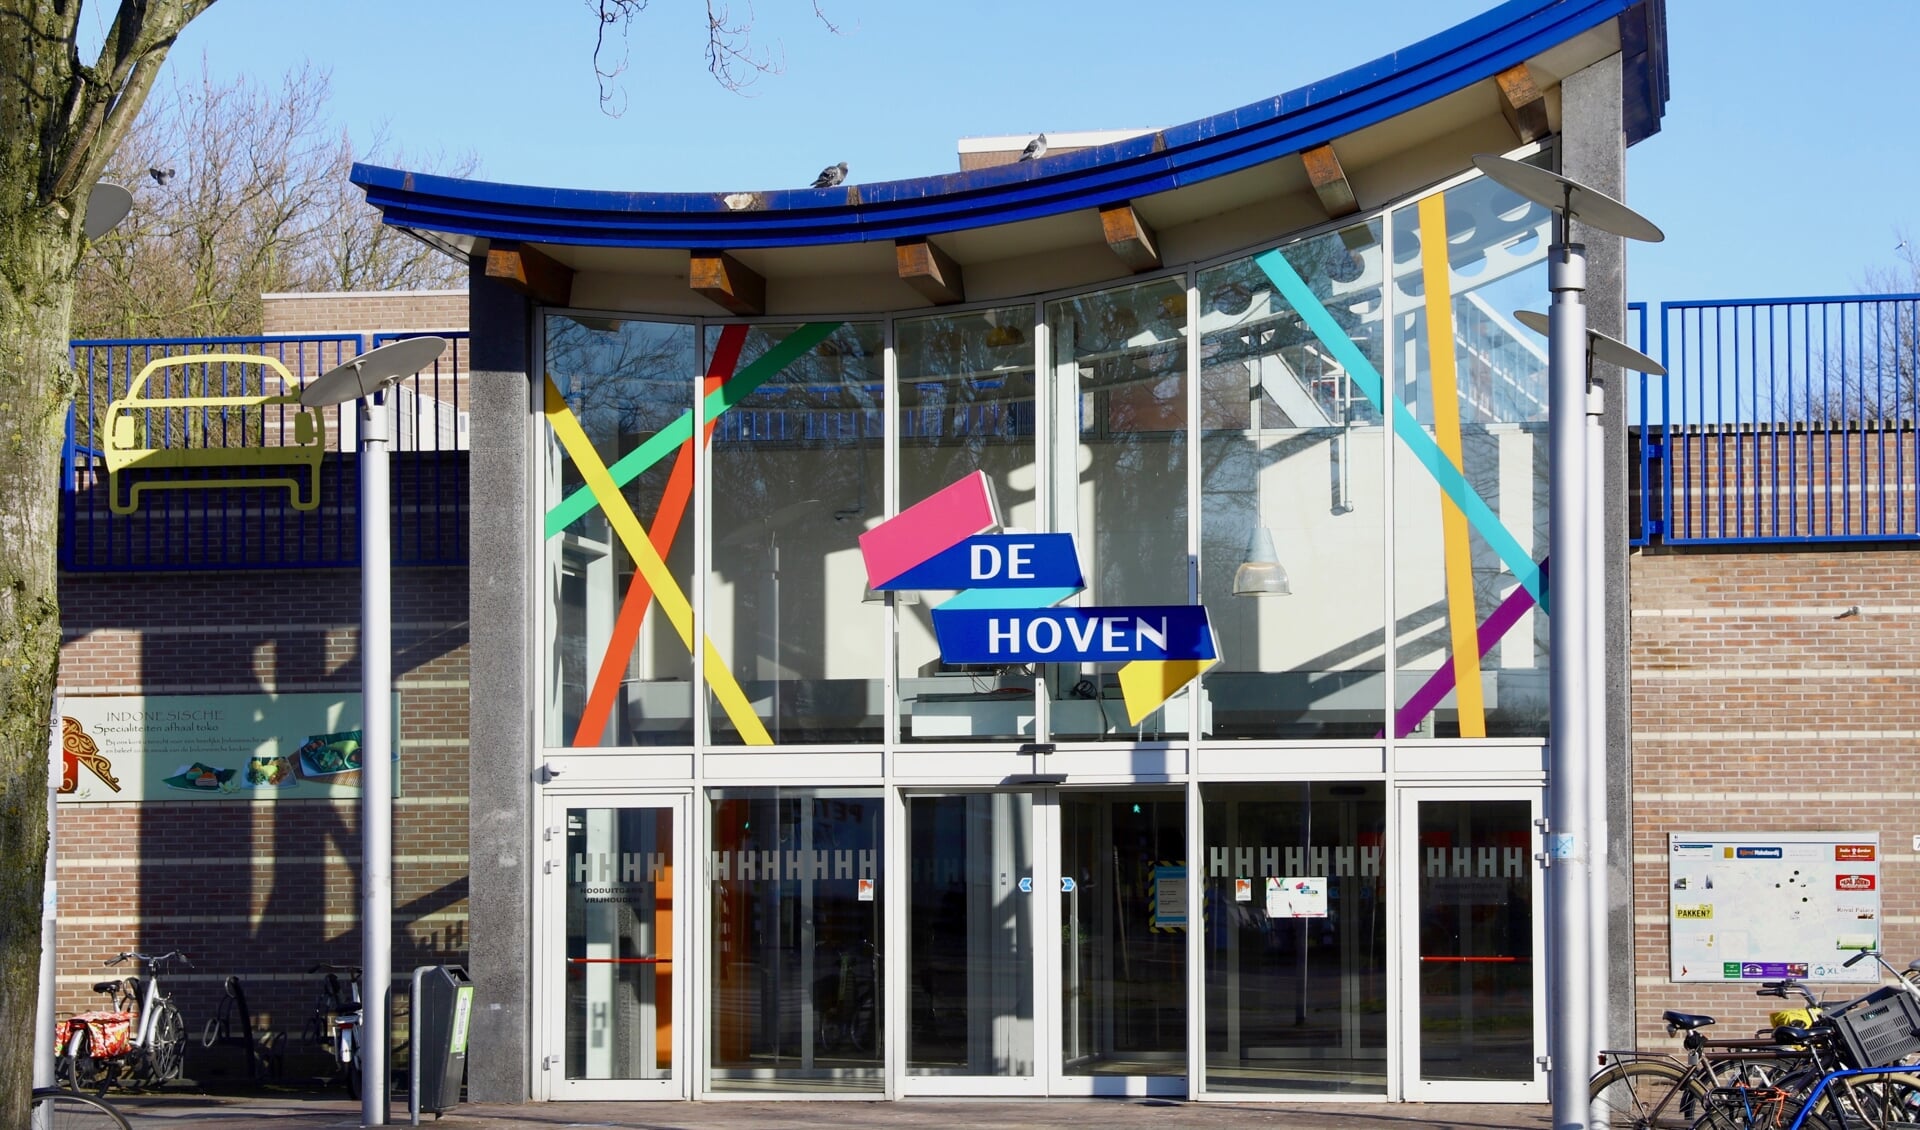 Winkelcentrum De Hoven Passage (Foto: Koos Bommelé)